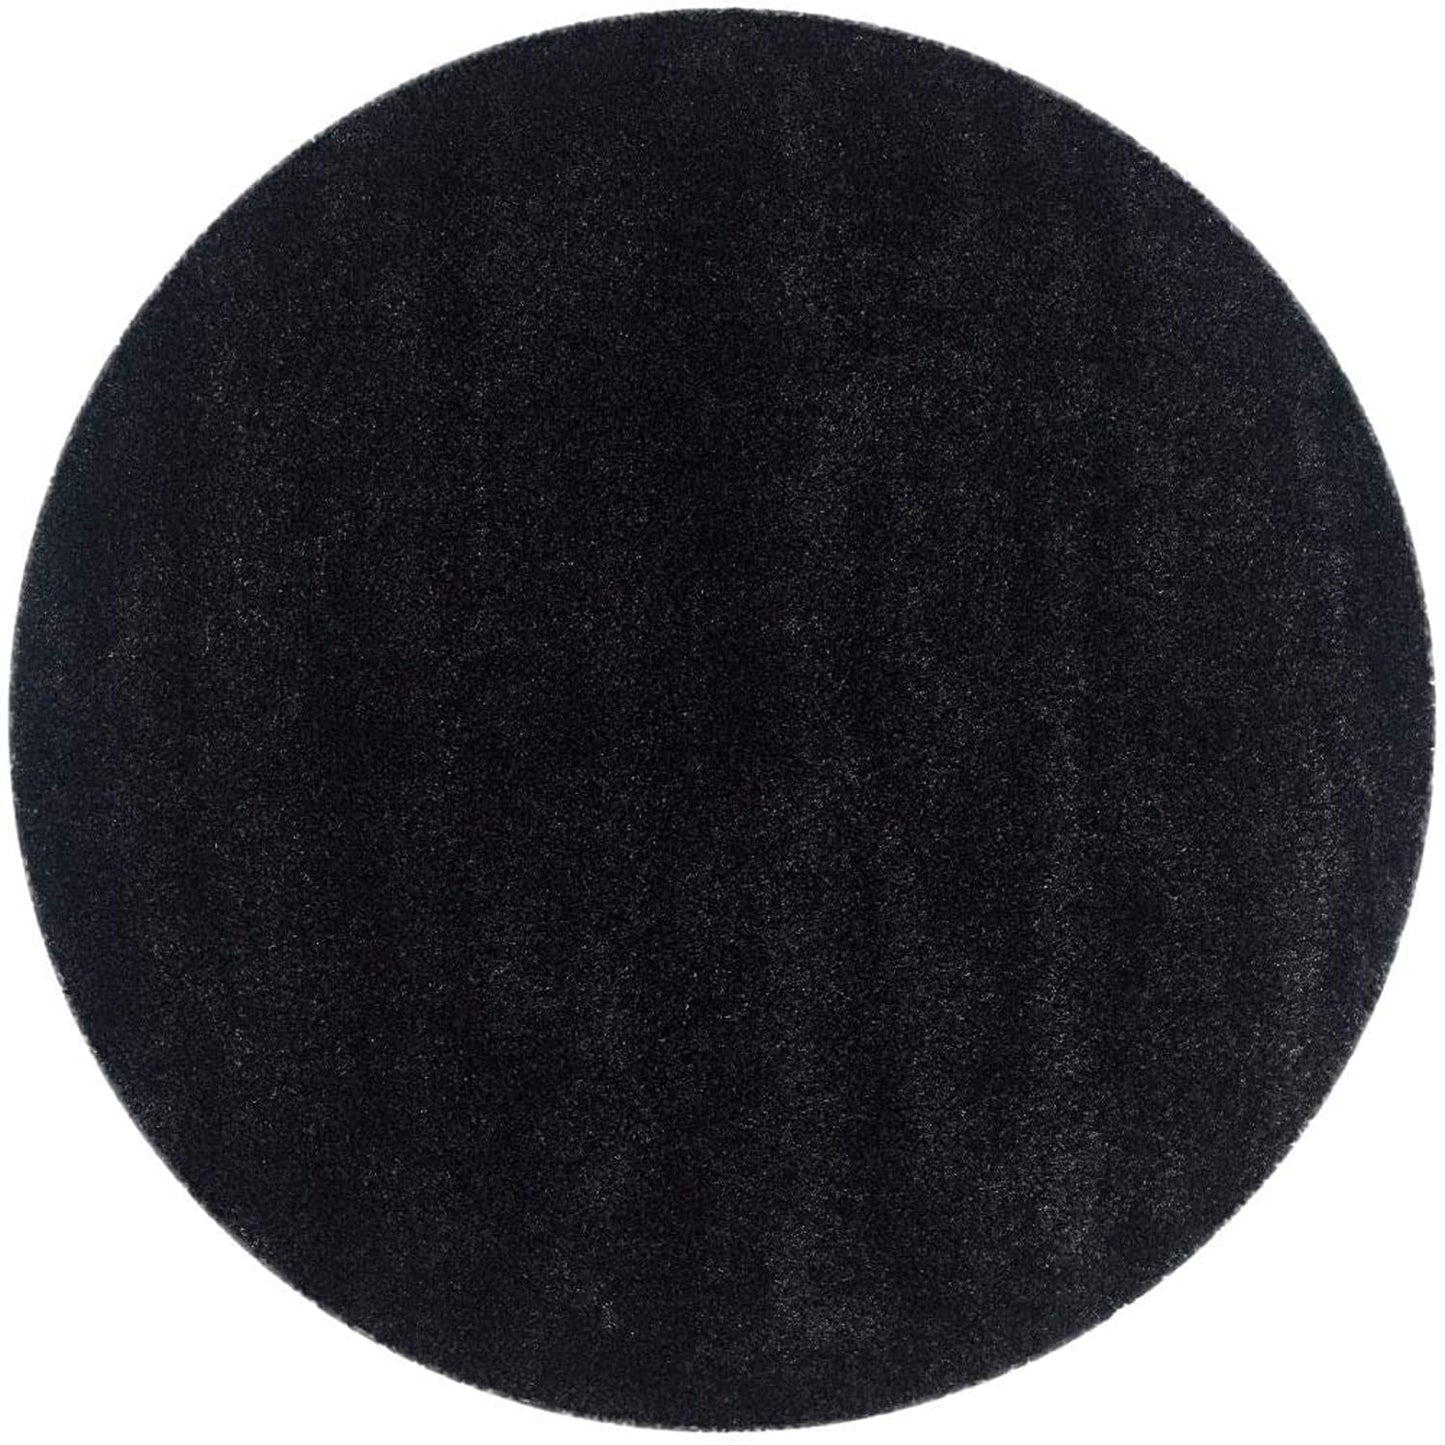 Kashyapa Rugs Collection- Micro Plain Black Colour Soft Round Carpet. | Premium Carpet | Luxury Carpet